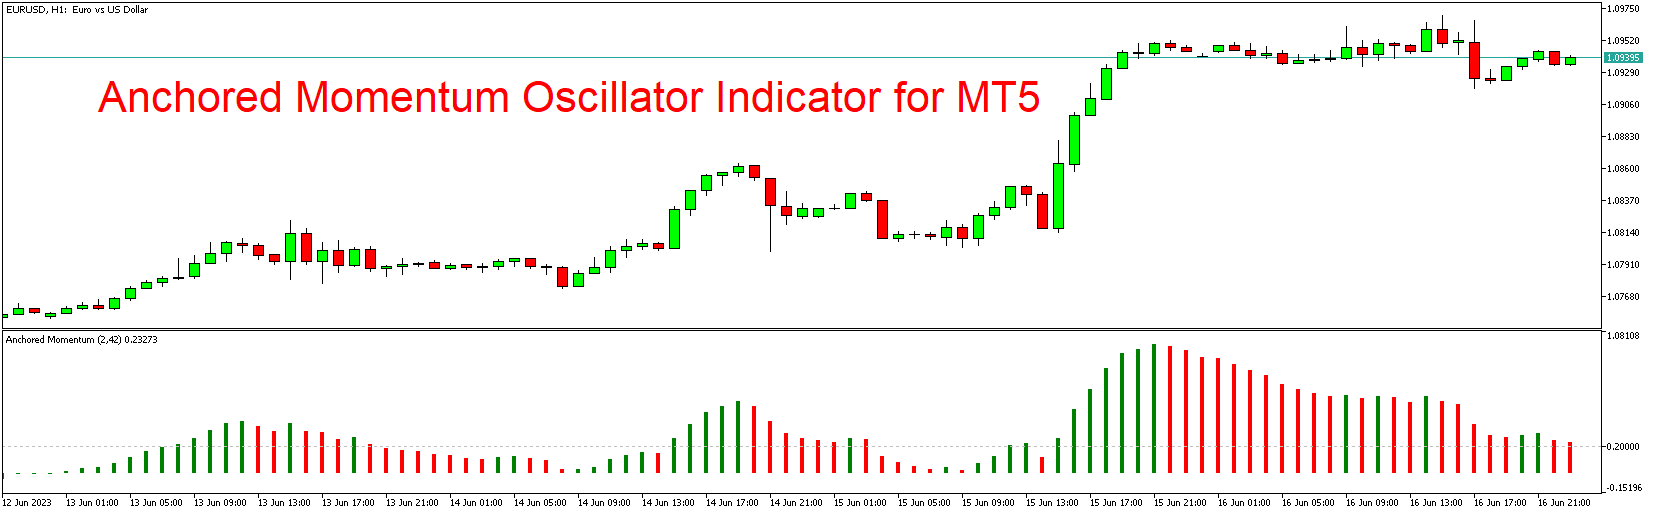 Anchored Momentum Oscillator Indicator For Mt5 Free Download